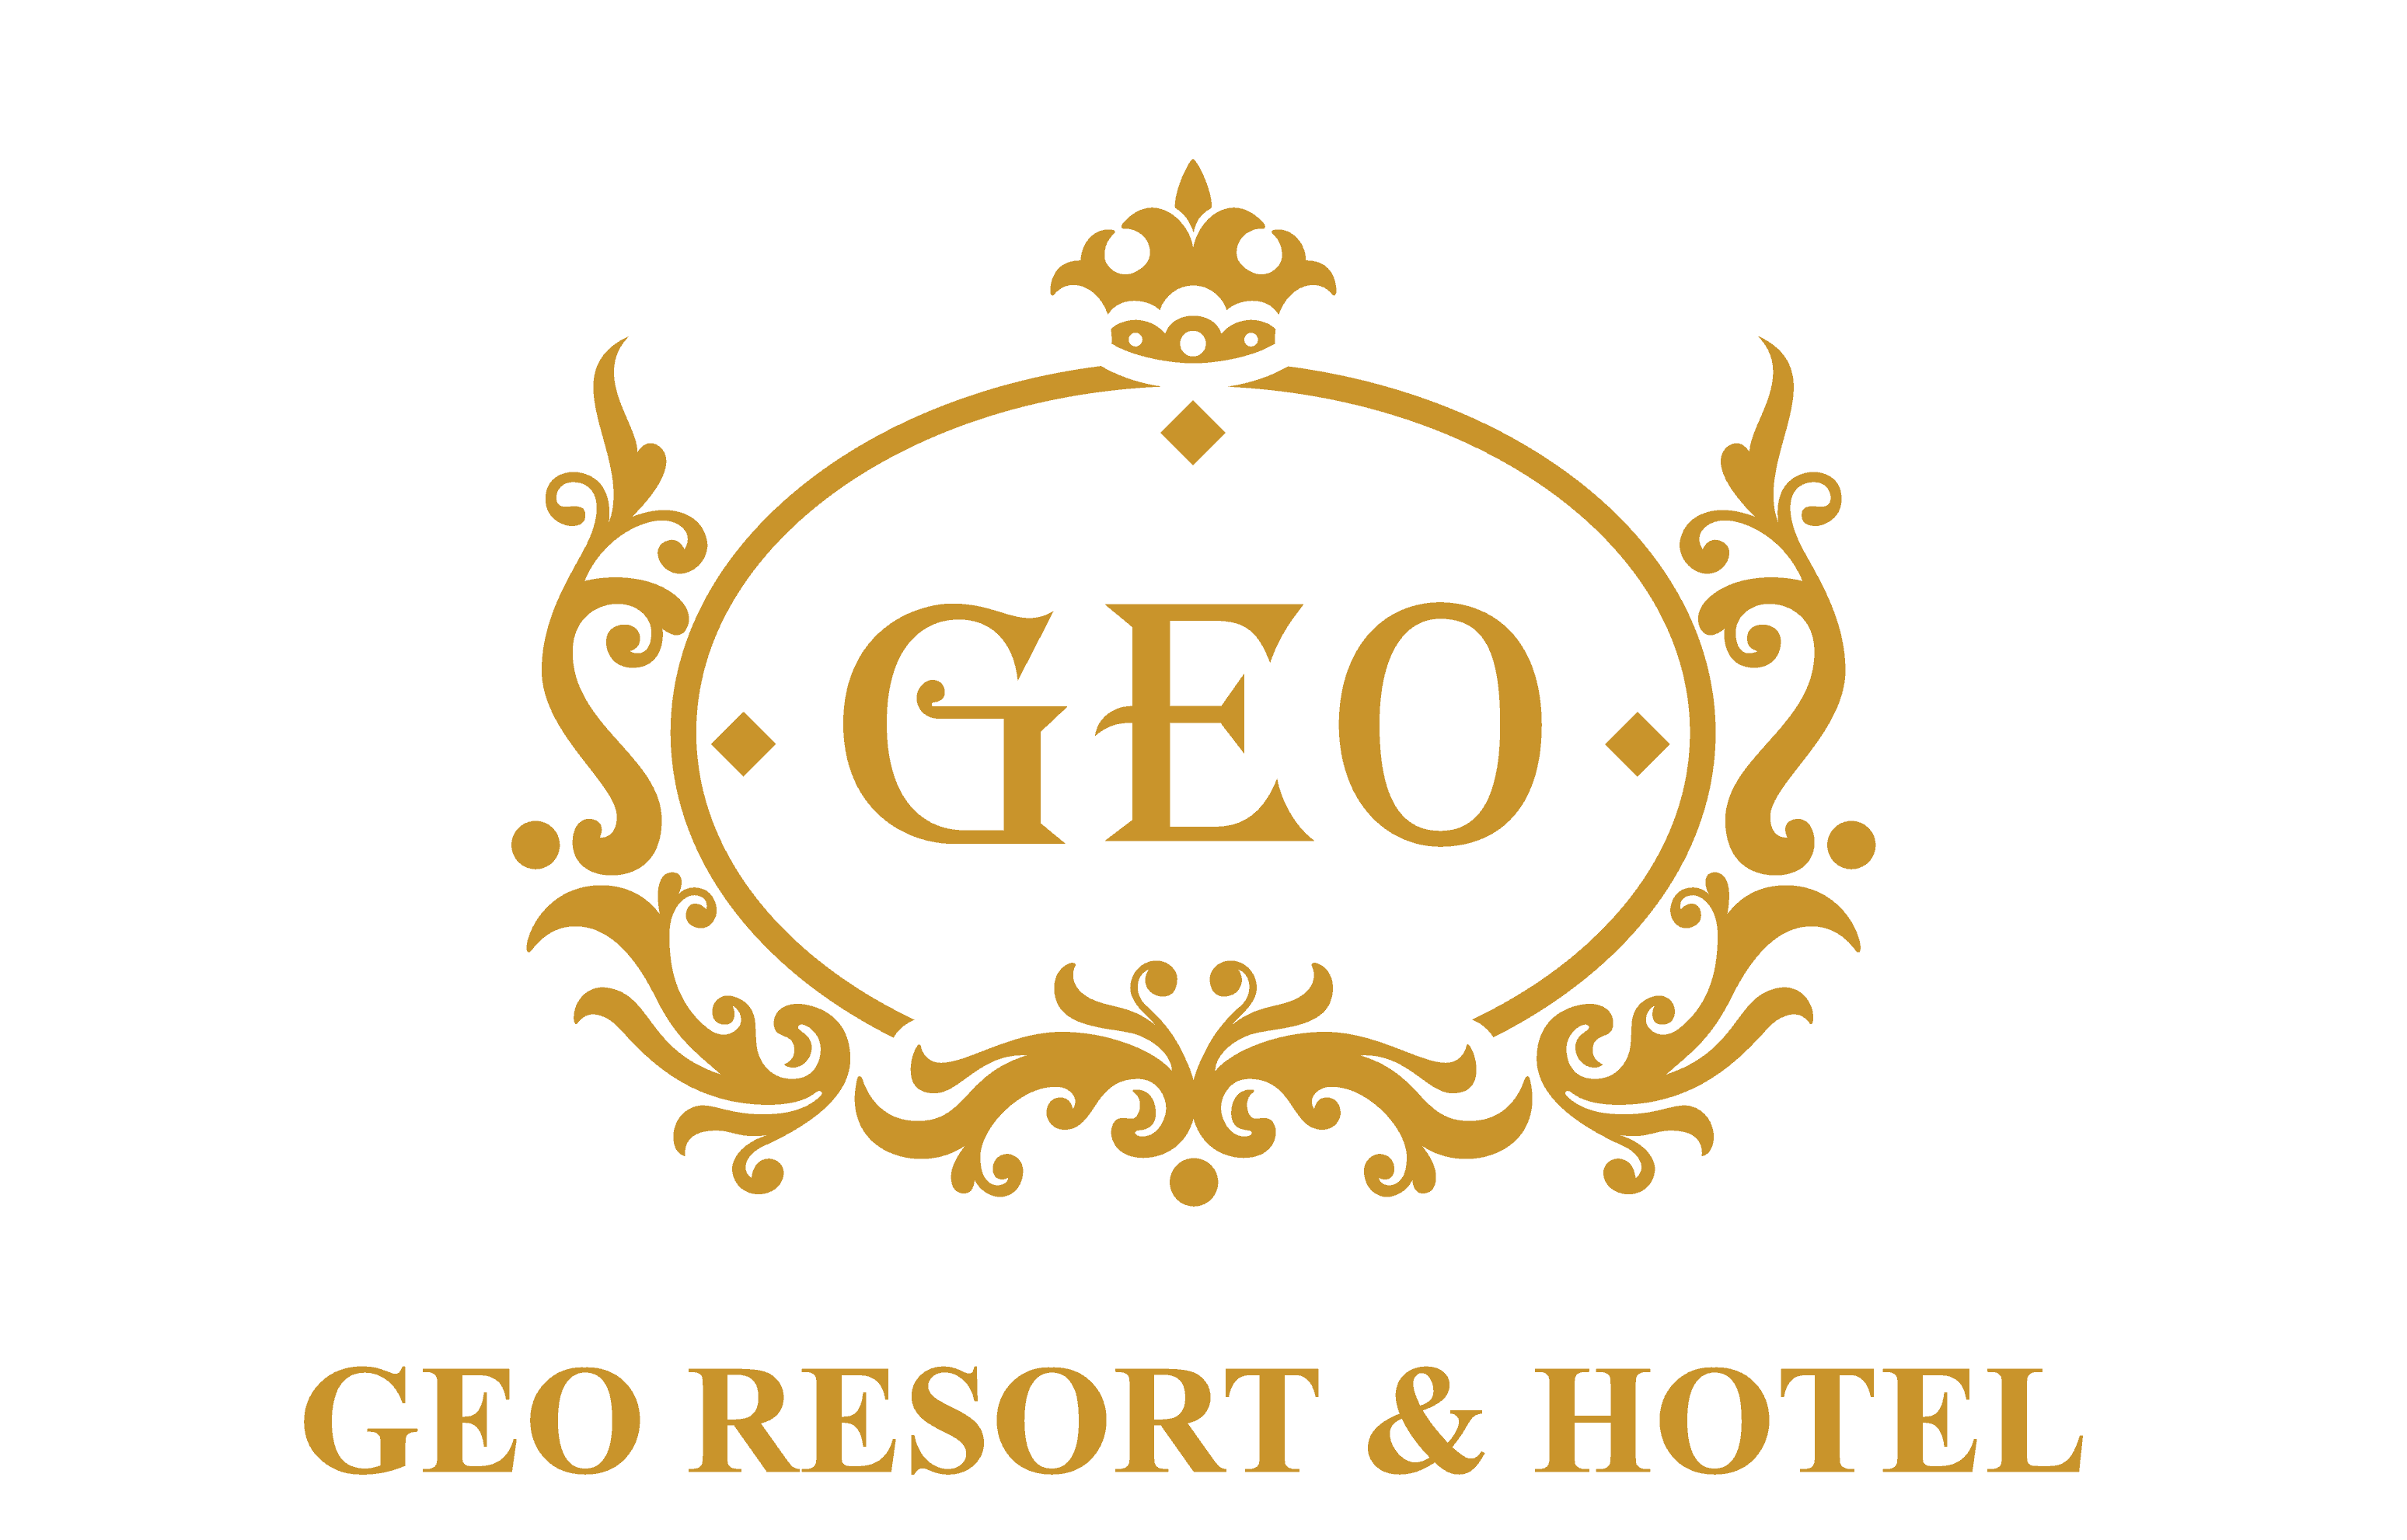 And hotel resort geo